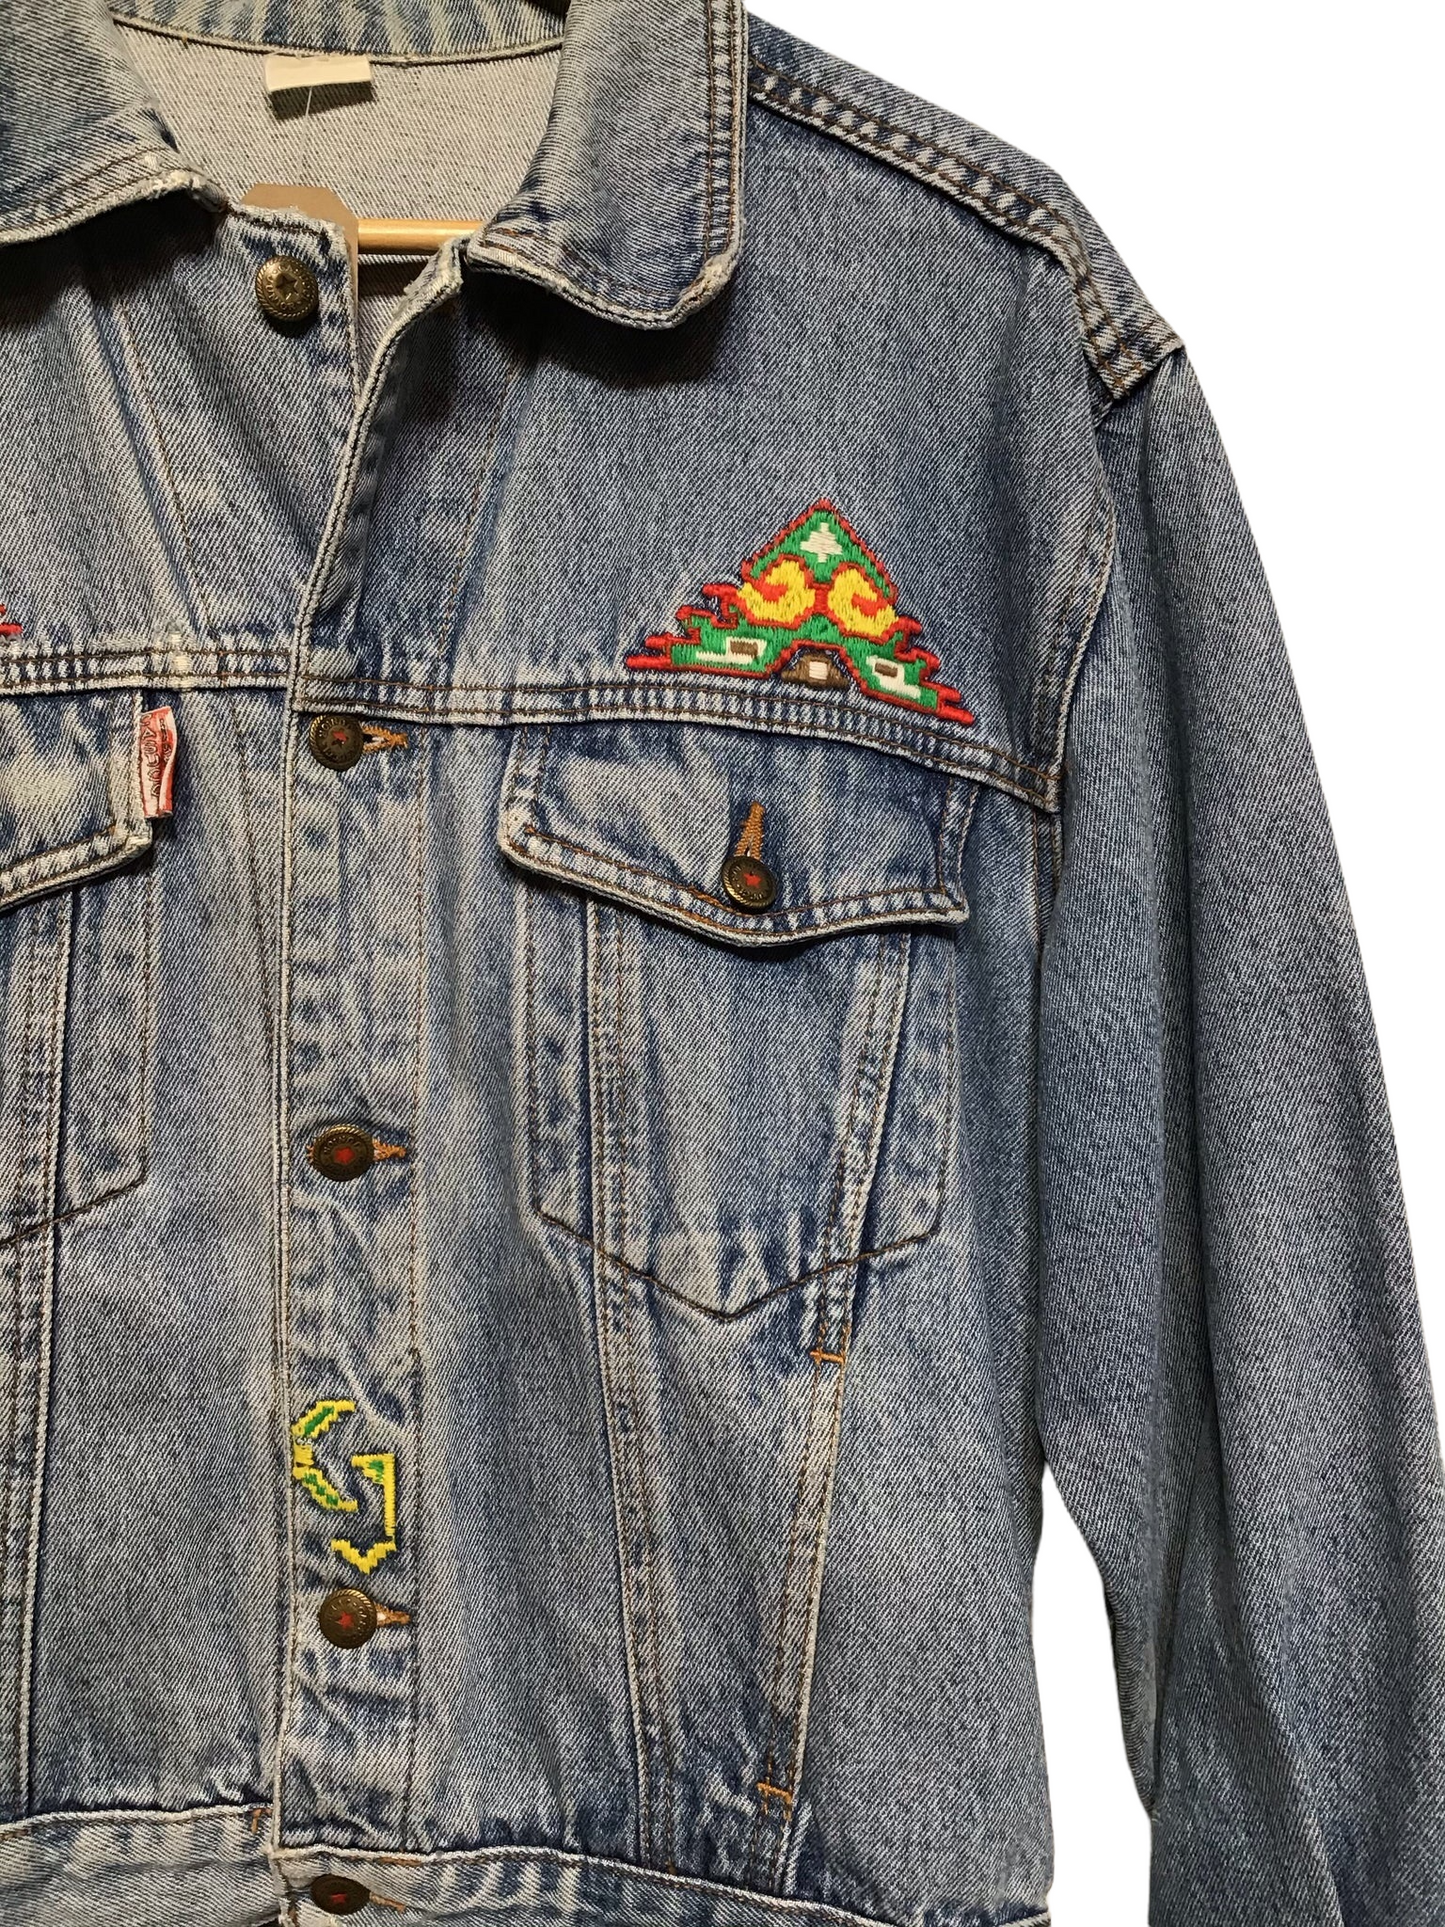 Embroidered Denim Jacket (Size S)